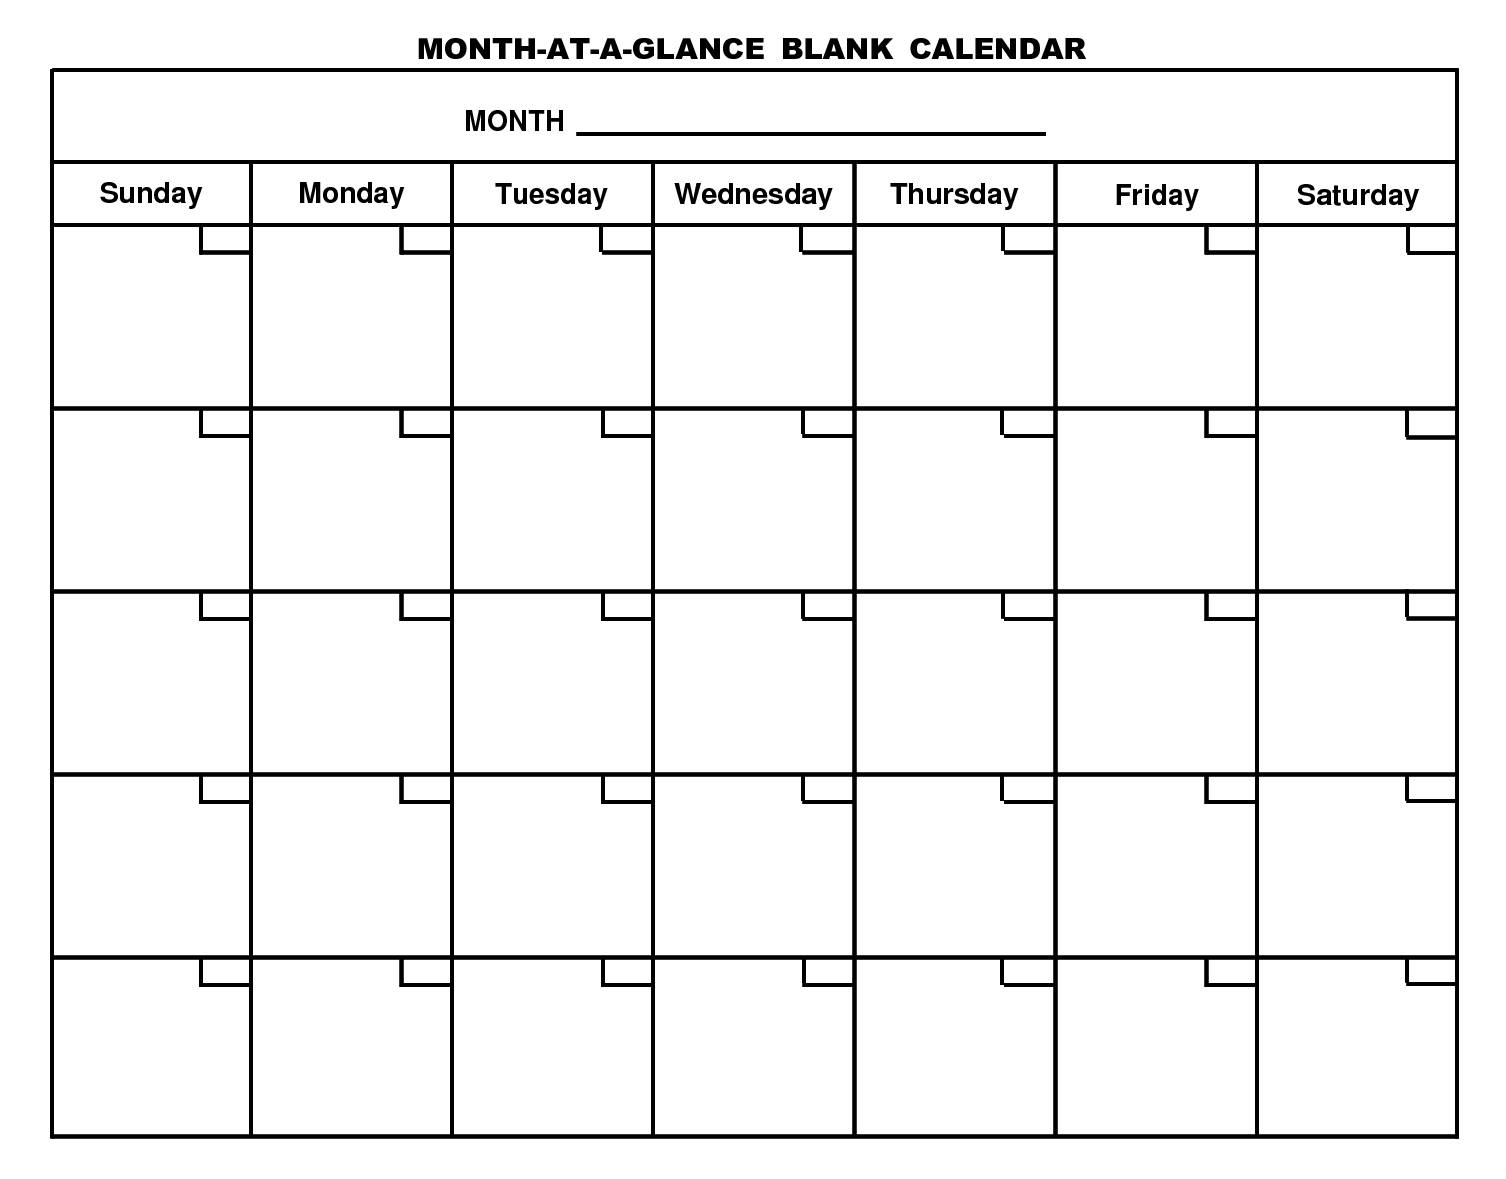 Pinstacy Tangren On Work | Printable Blank Calendar Throughout Month At A Glance Blank Calendar Template